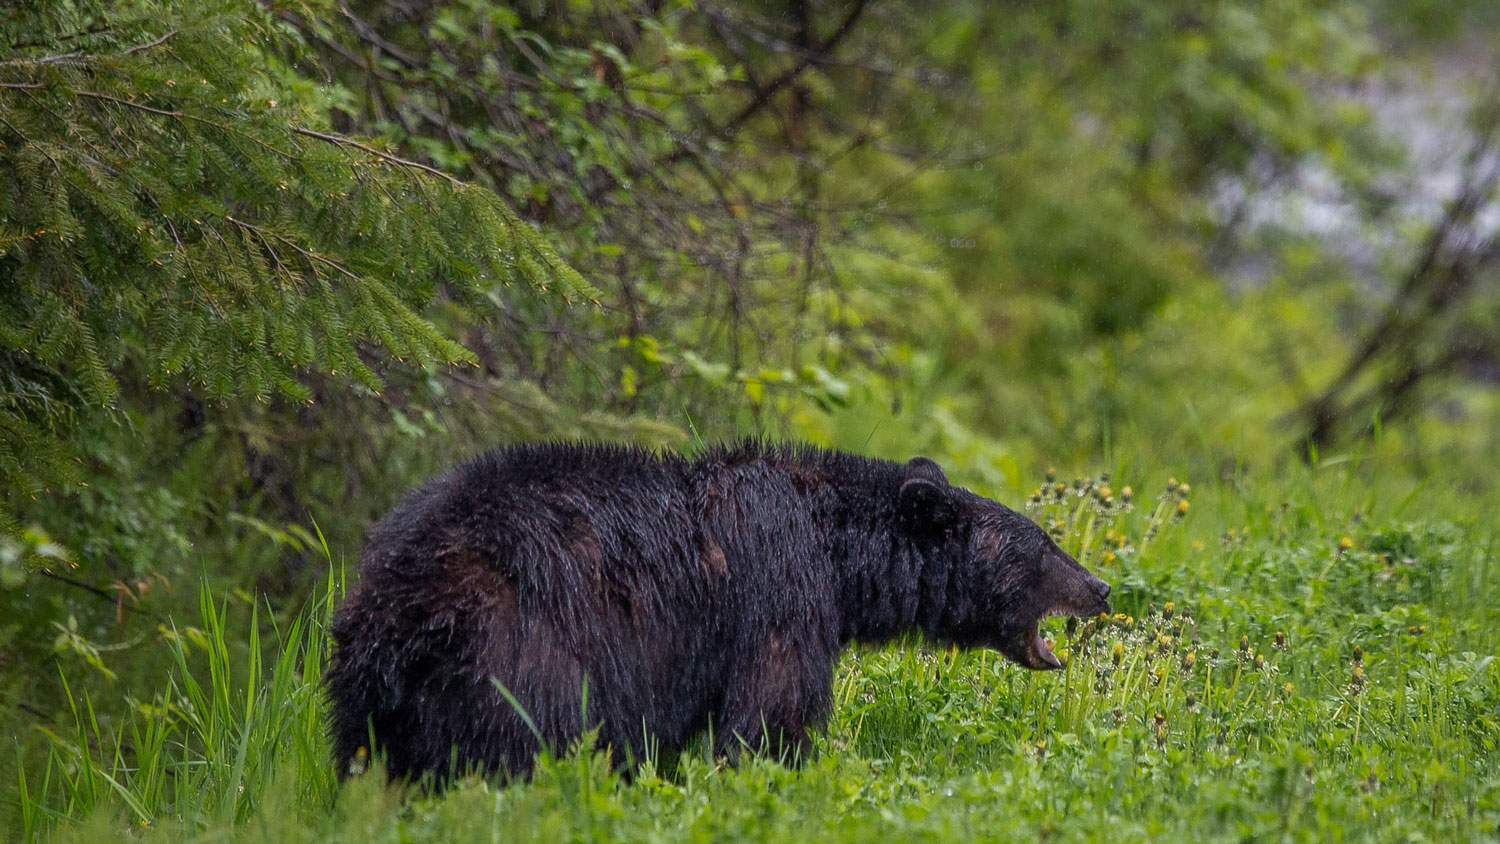 Curious Black Bear Nudges Napping Man Awake in Massachusetts Backyard